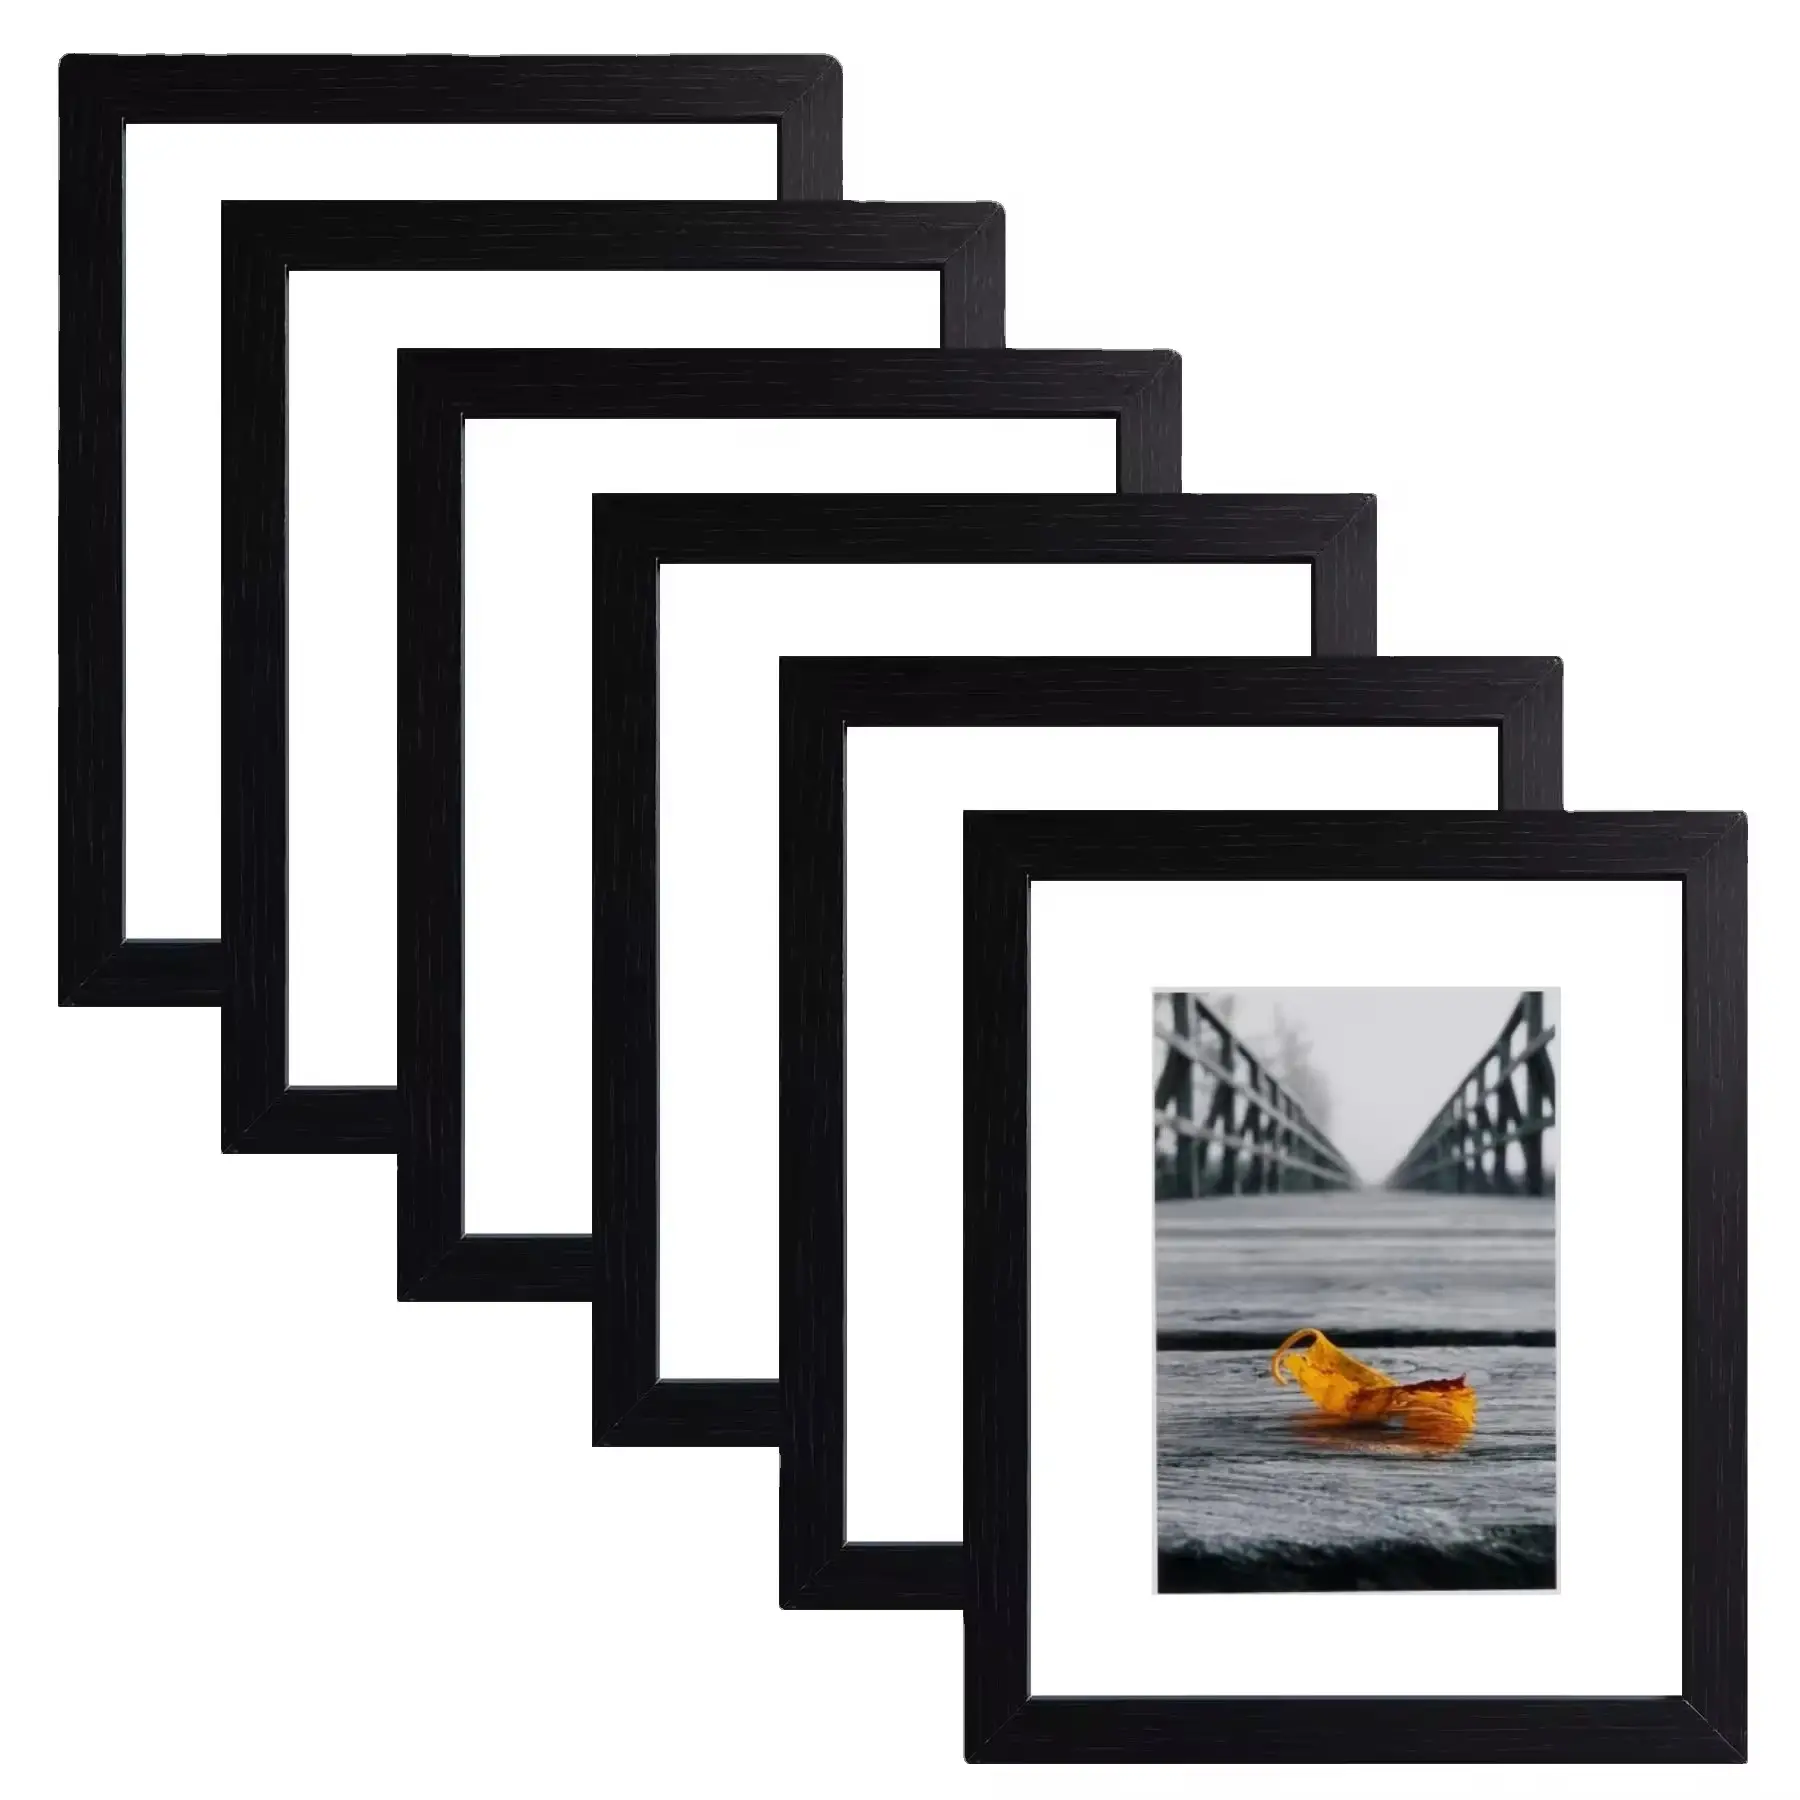 Individuelle günstige A1, A2, A3, A4, A5, 4×6, 5×7, 6×8, 8×10, 11×14, 12×16, 12×18, 16×20,18×24, 24×36 schwarz-weißes Posterbild Holz-Foto rahmen